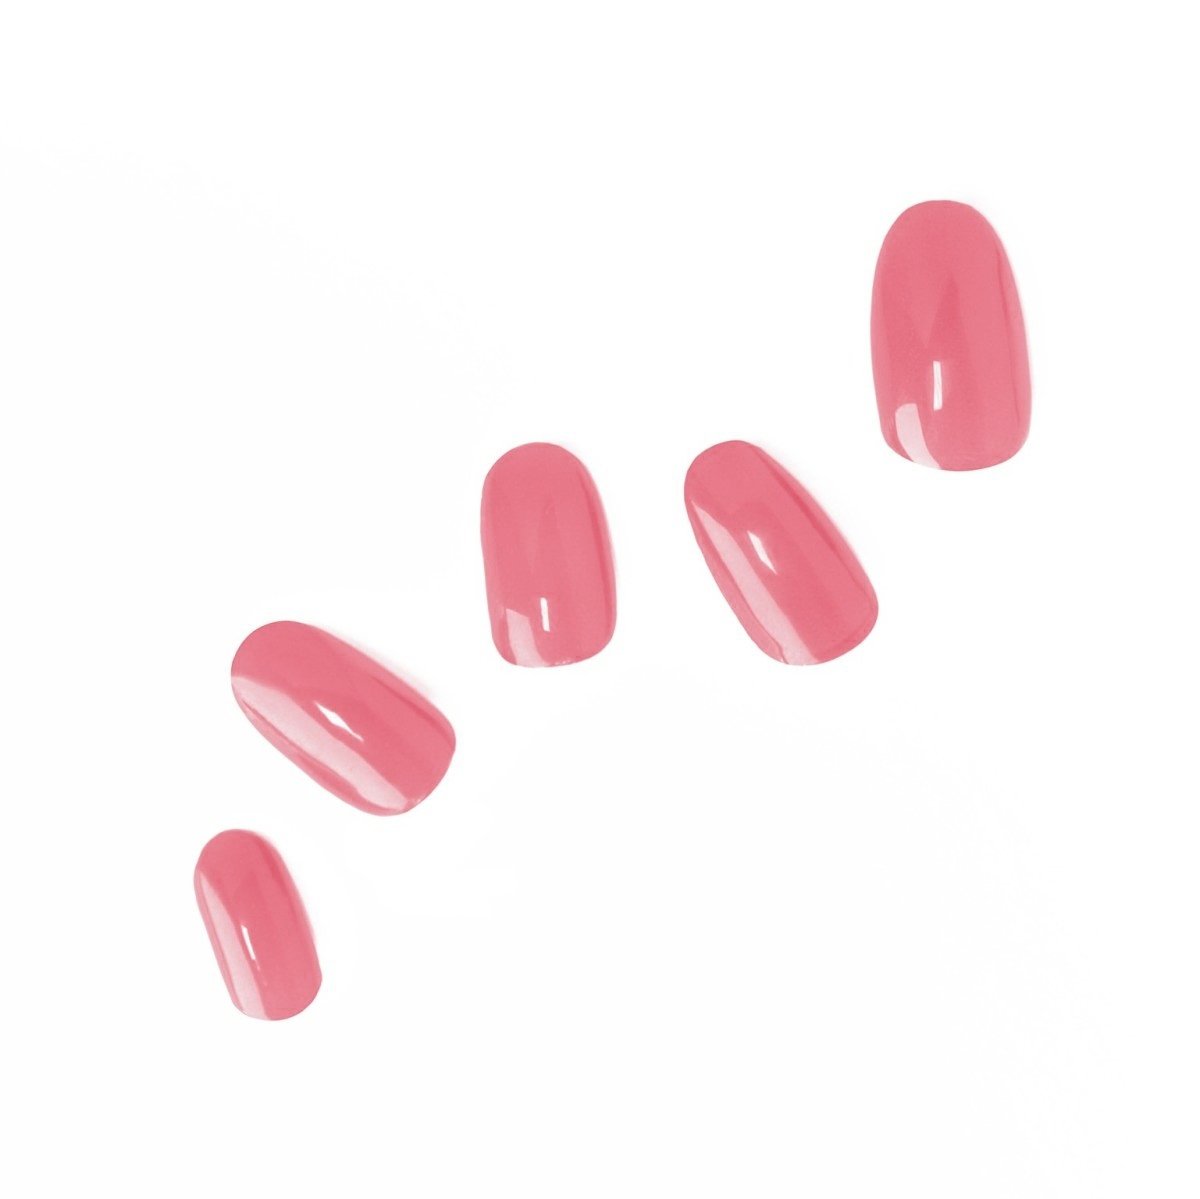 Soft Pink Summer Pedicure Gel Nail Strips, Soft Blush